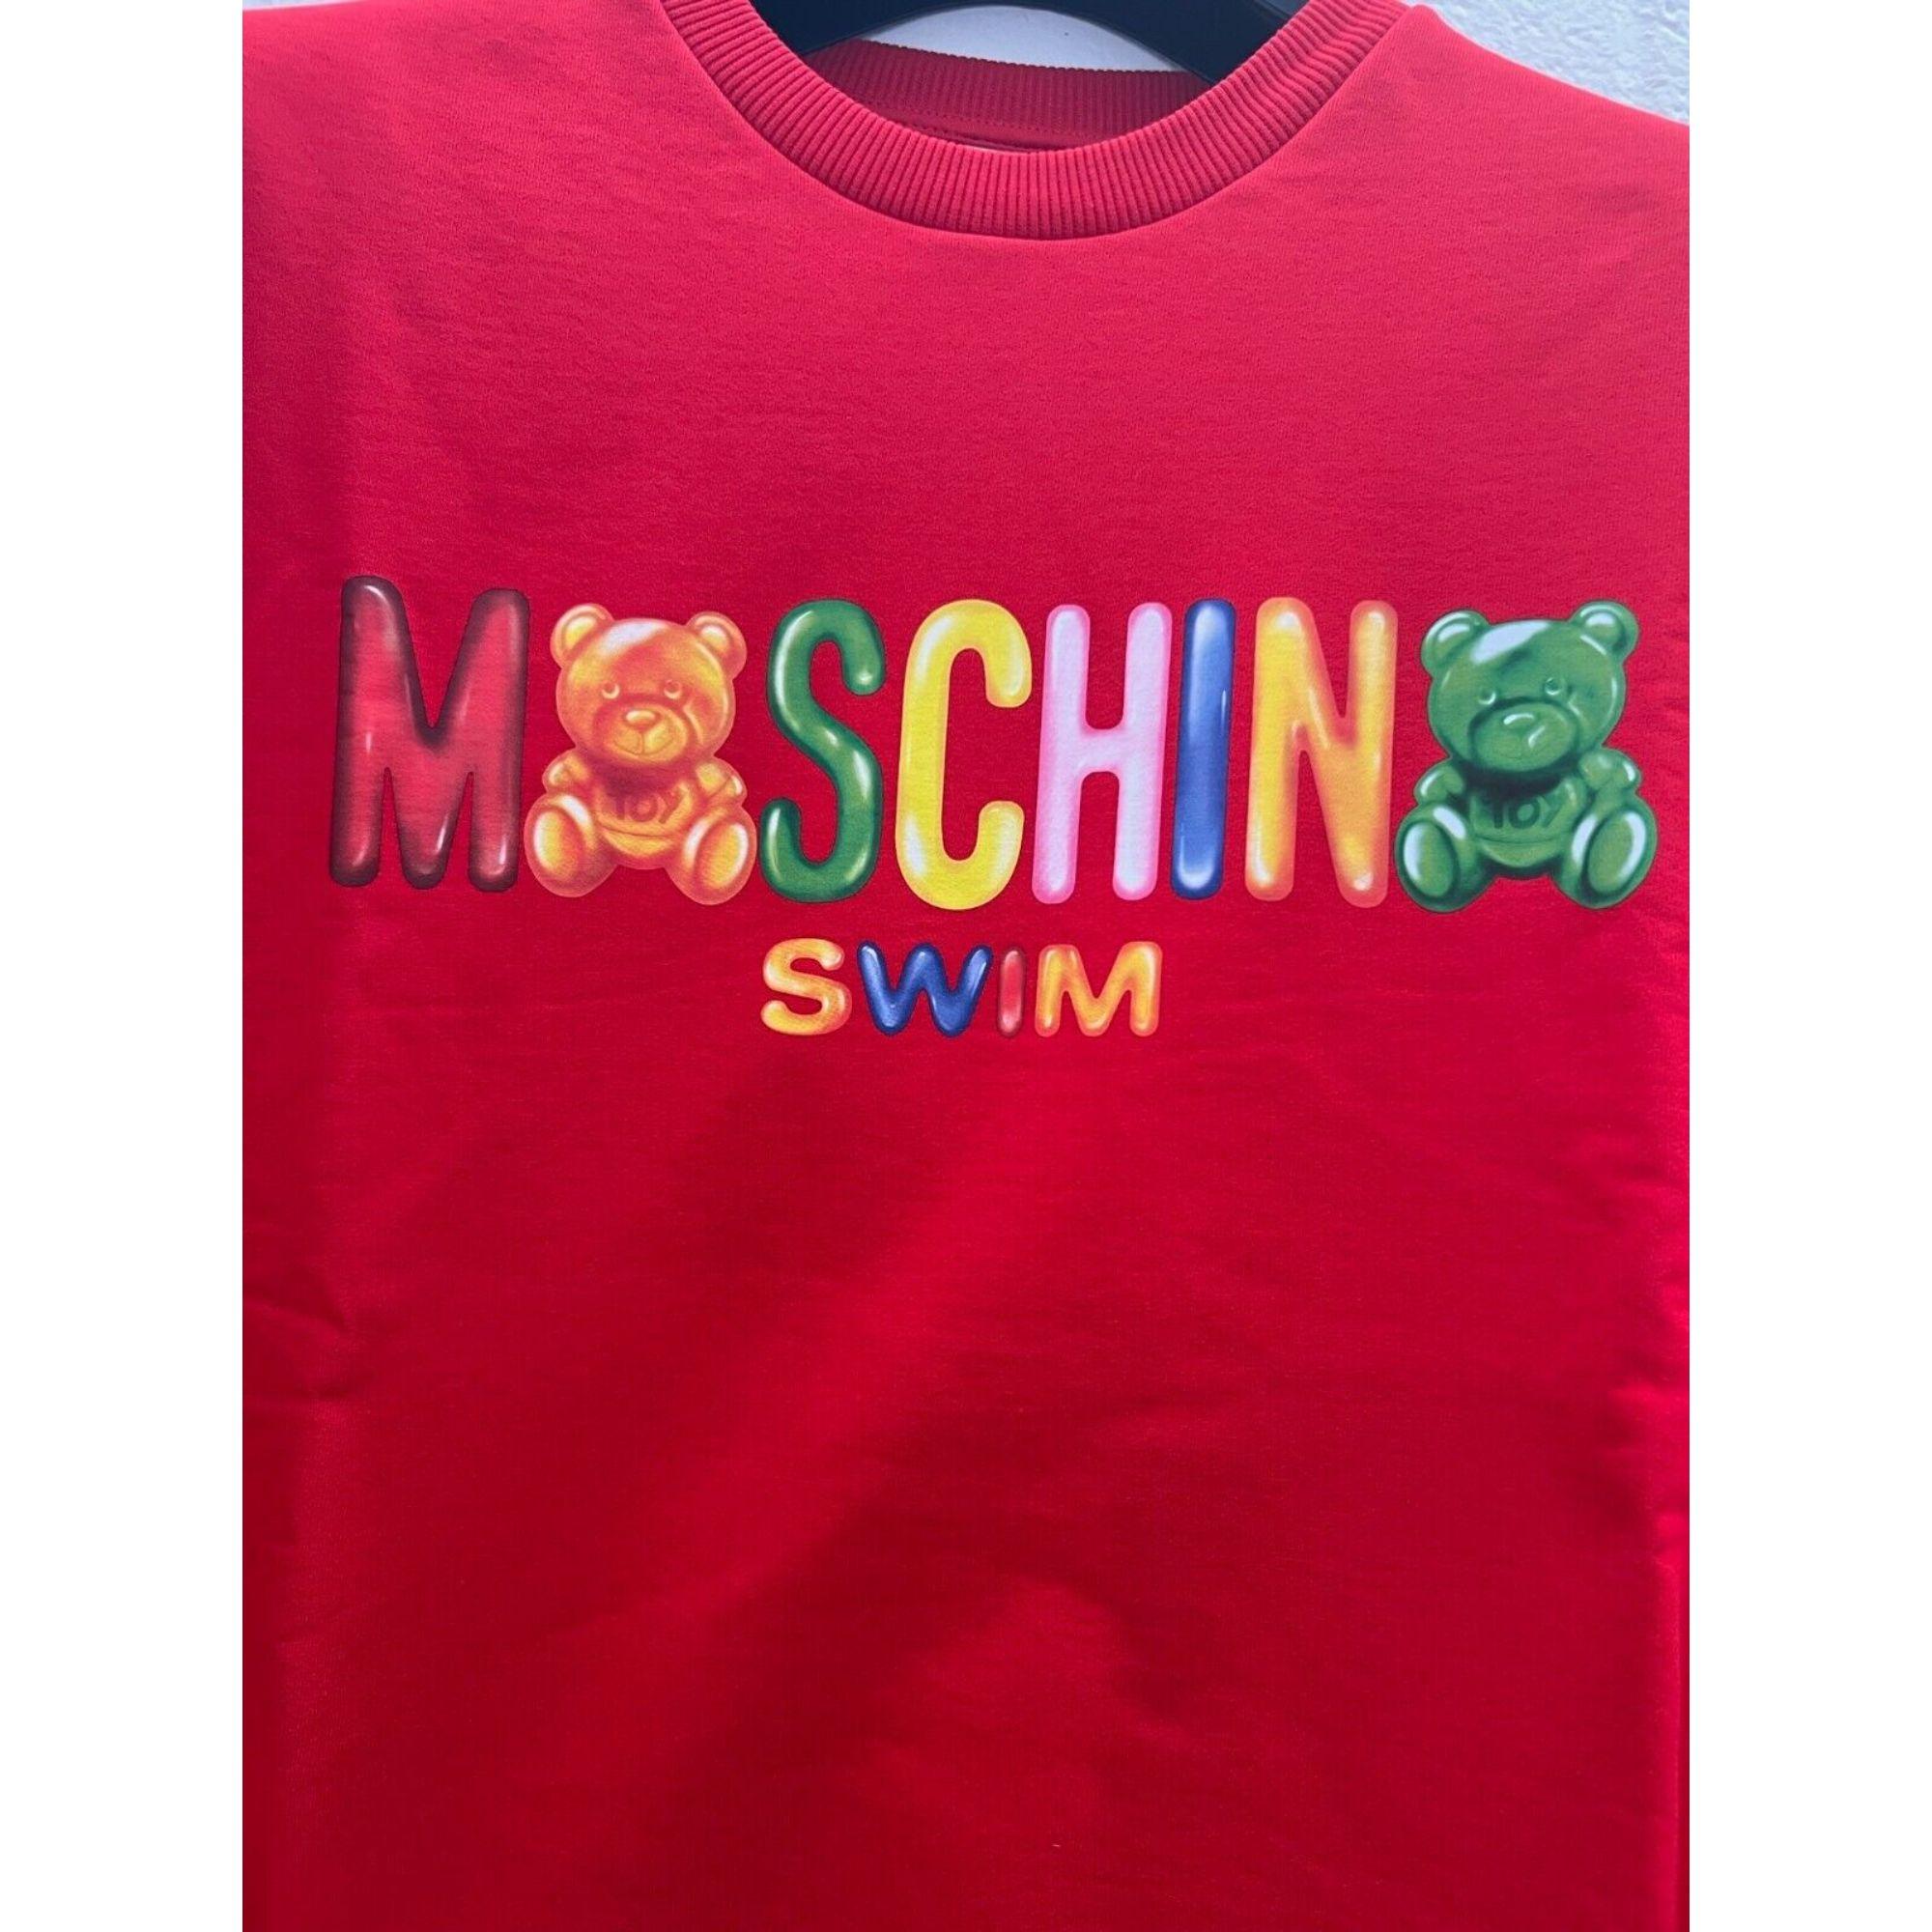 SS19 Moschino Swim Jelly Gummy Teddy Bear Sweatshirt by Jeremy Scott, Size XS In New Condition For Sale In Palm Springs, CA